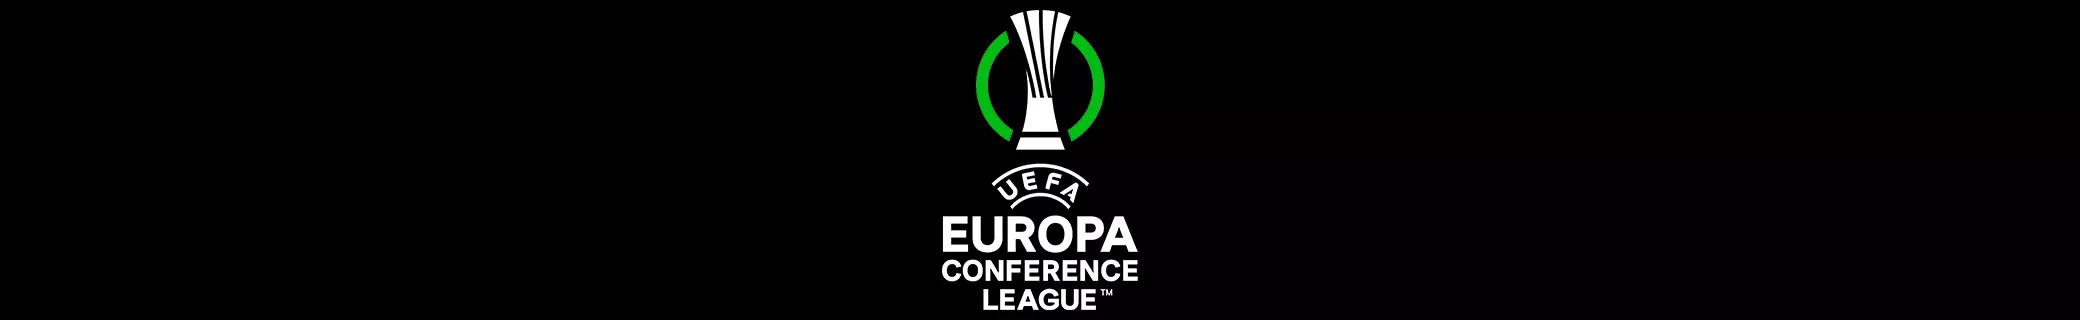 Optakt: Conference League 2021/22